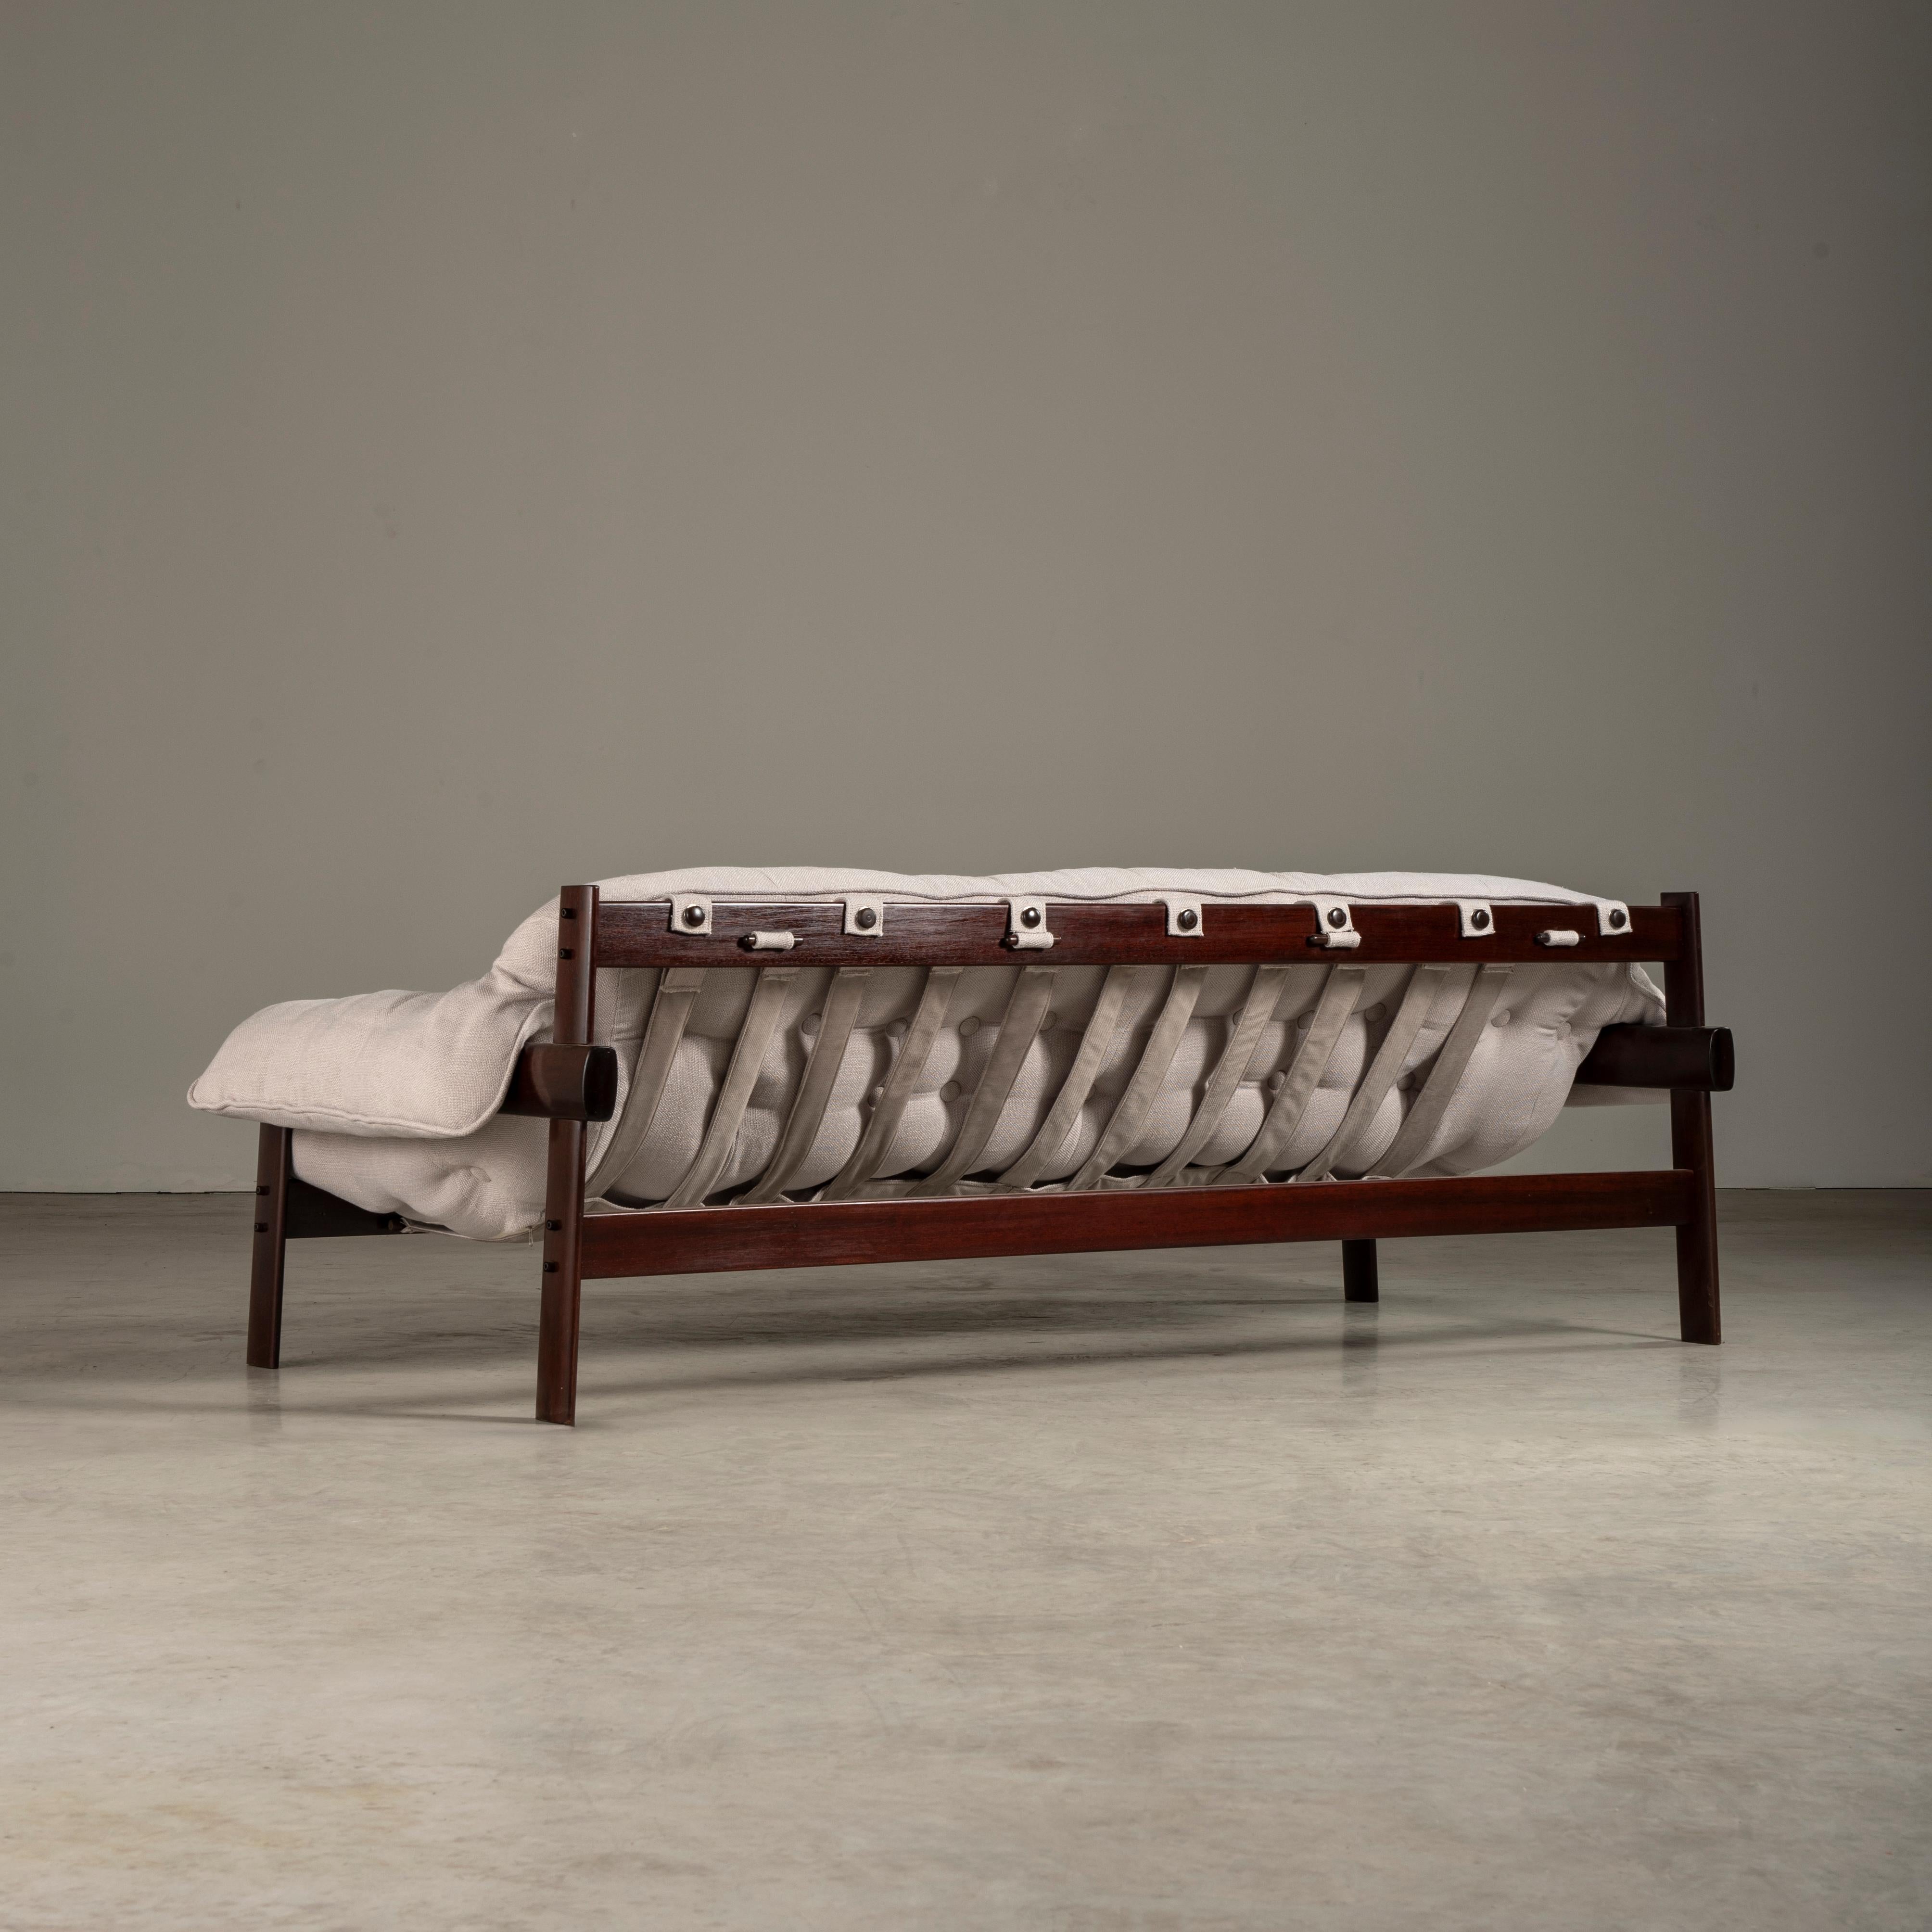 Sofa 'MP-41' in Hardwood, by Percival Lafer, Brazilian Mid-Century Modern Design For Sale 2